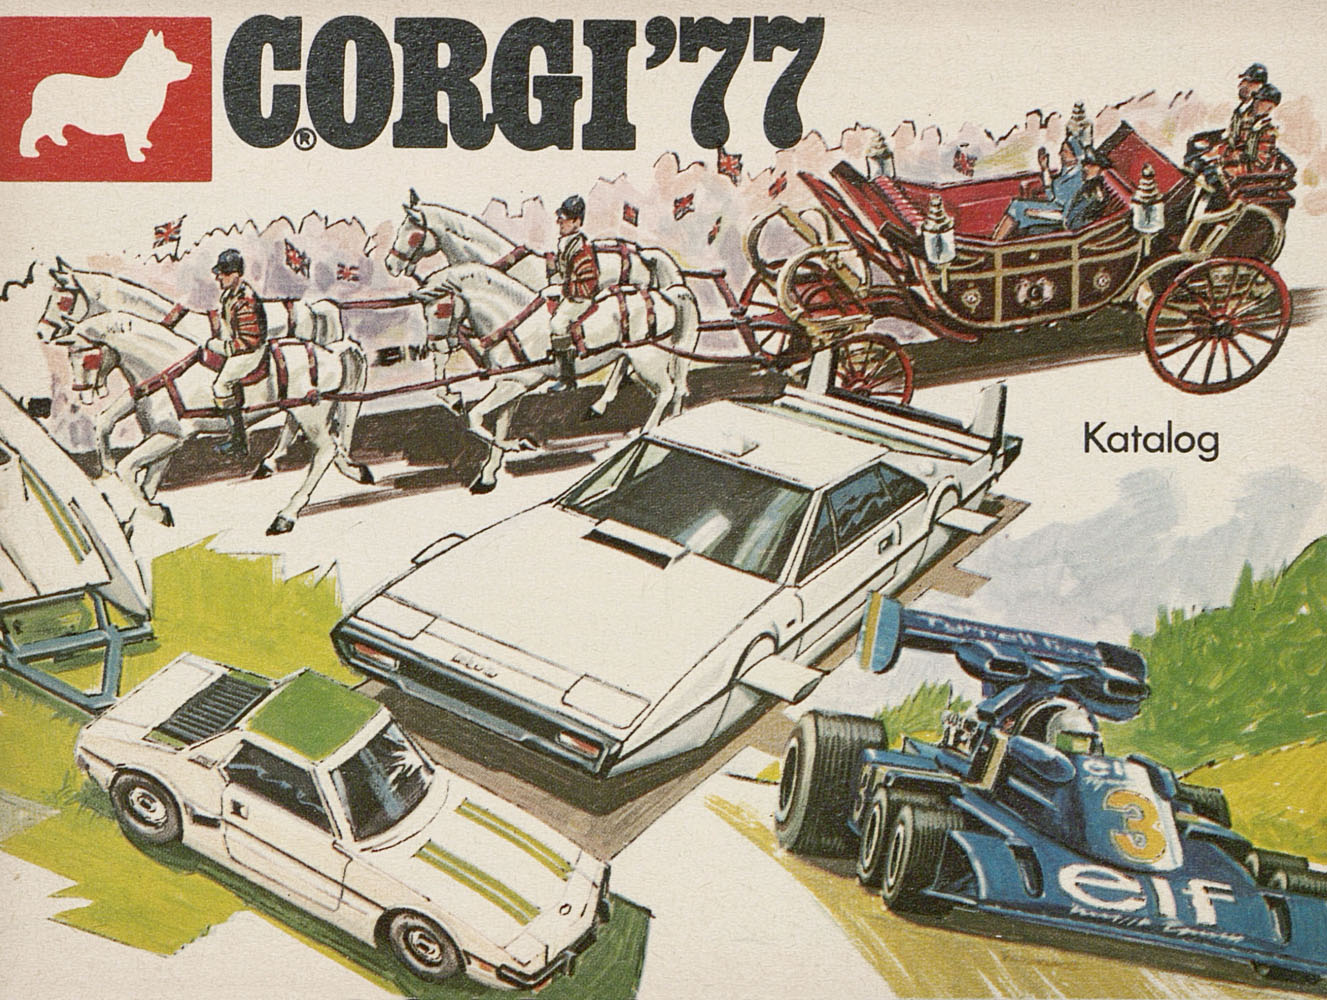 Corgi Toys catalog 1977